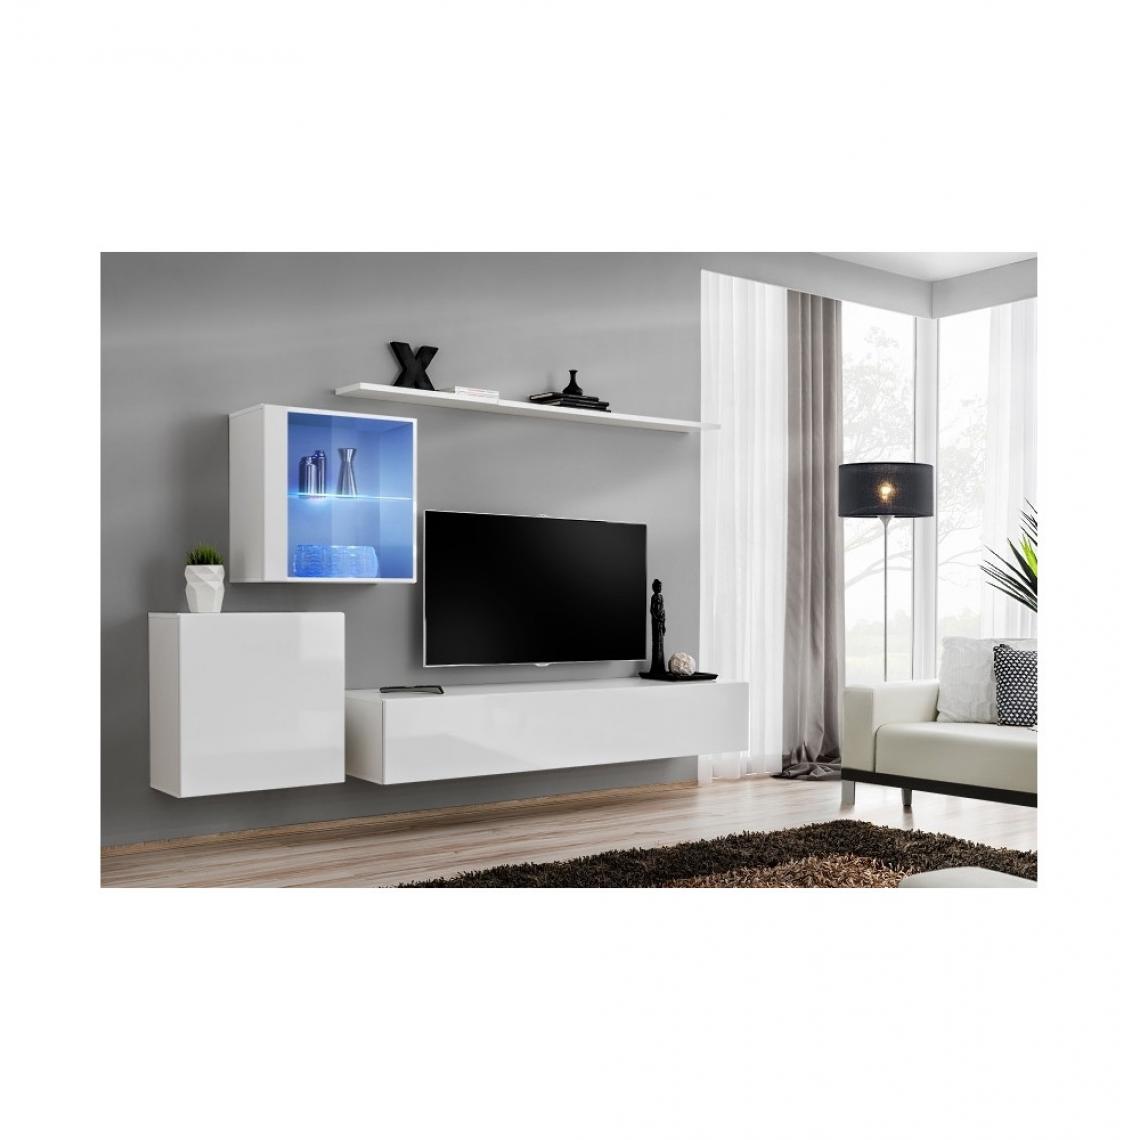 Ac-Deco - Ensemble meuble TV mural - Switch XV - 250 cm x 150 cm x 40 cm - Blanc - Meubles TV, Hi-Fi